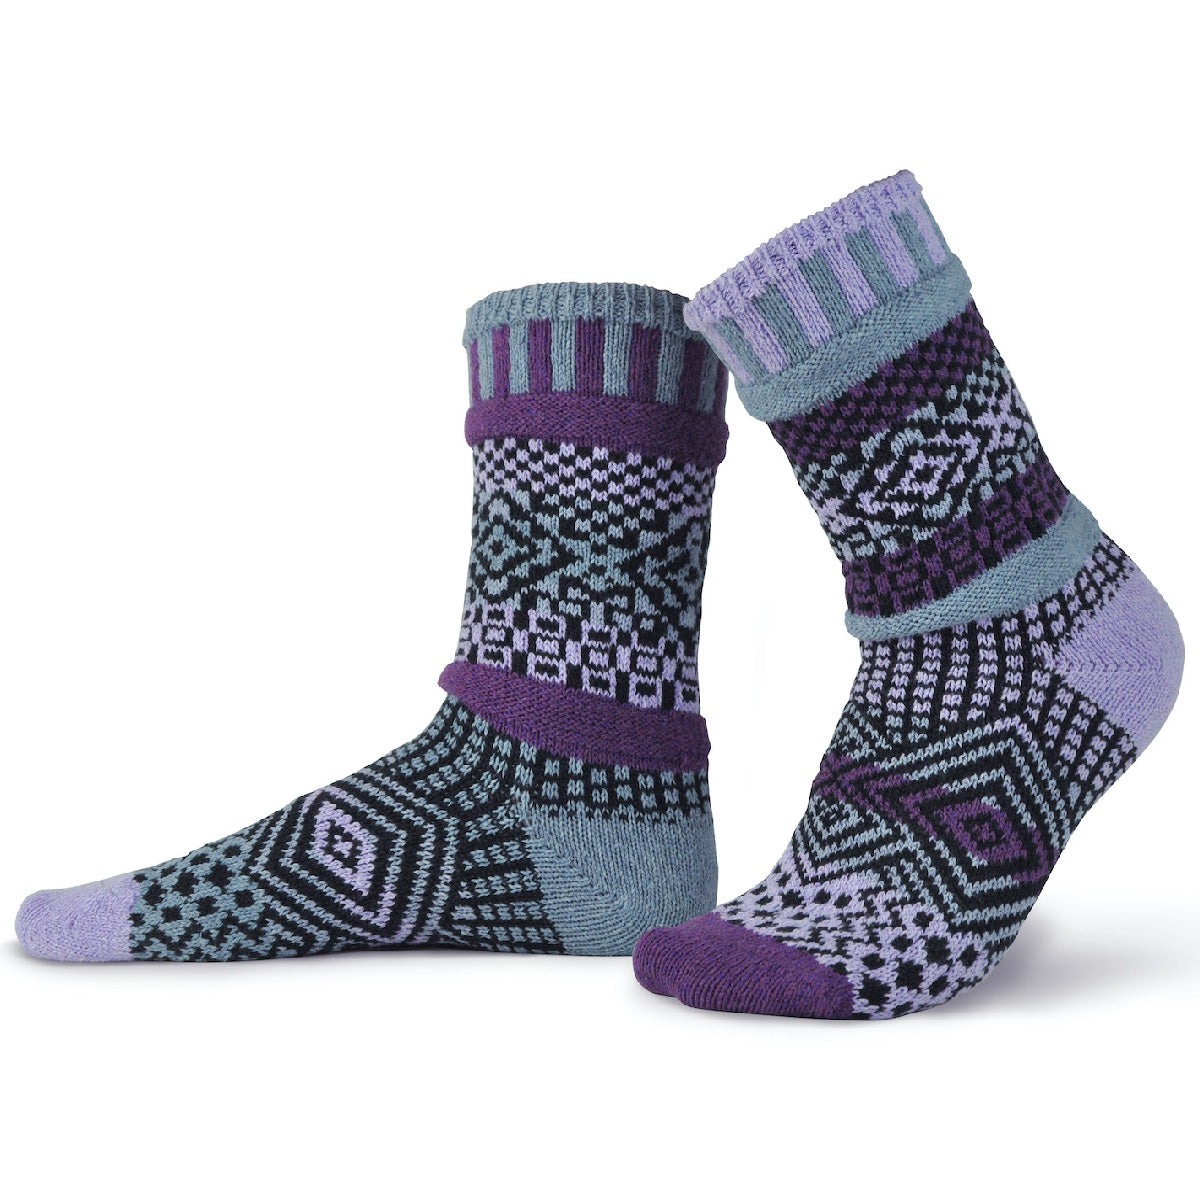 Fun mismatched socks feature funky purple patterns!